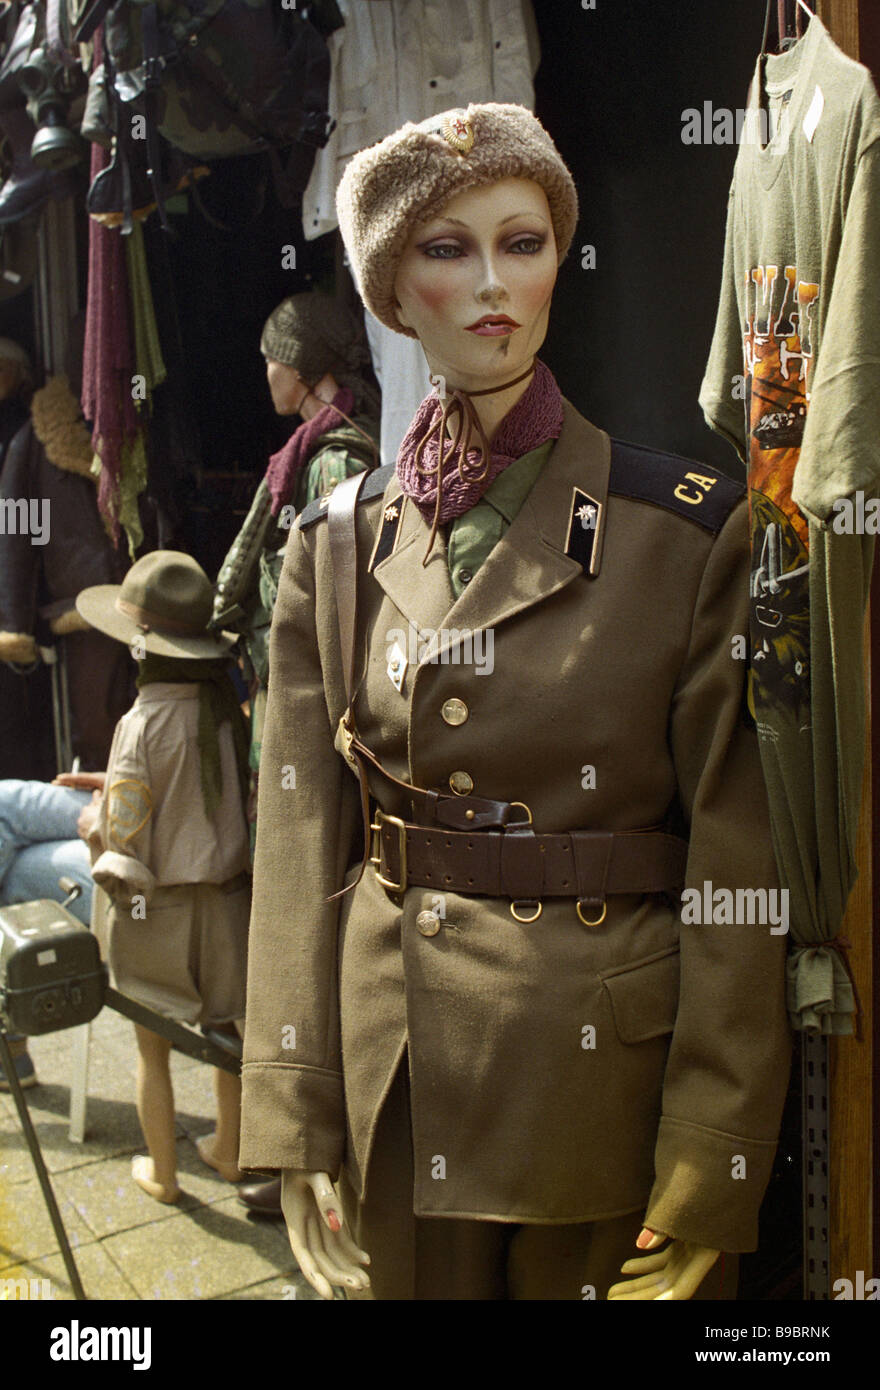 uniforme militar soviético moda en Holanda de stock Alamy